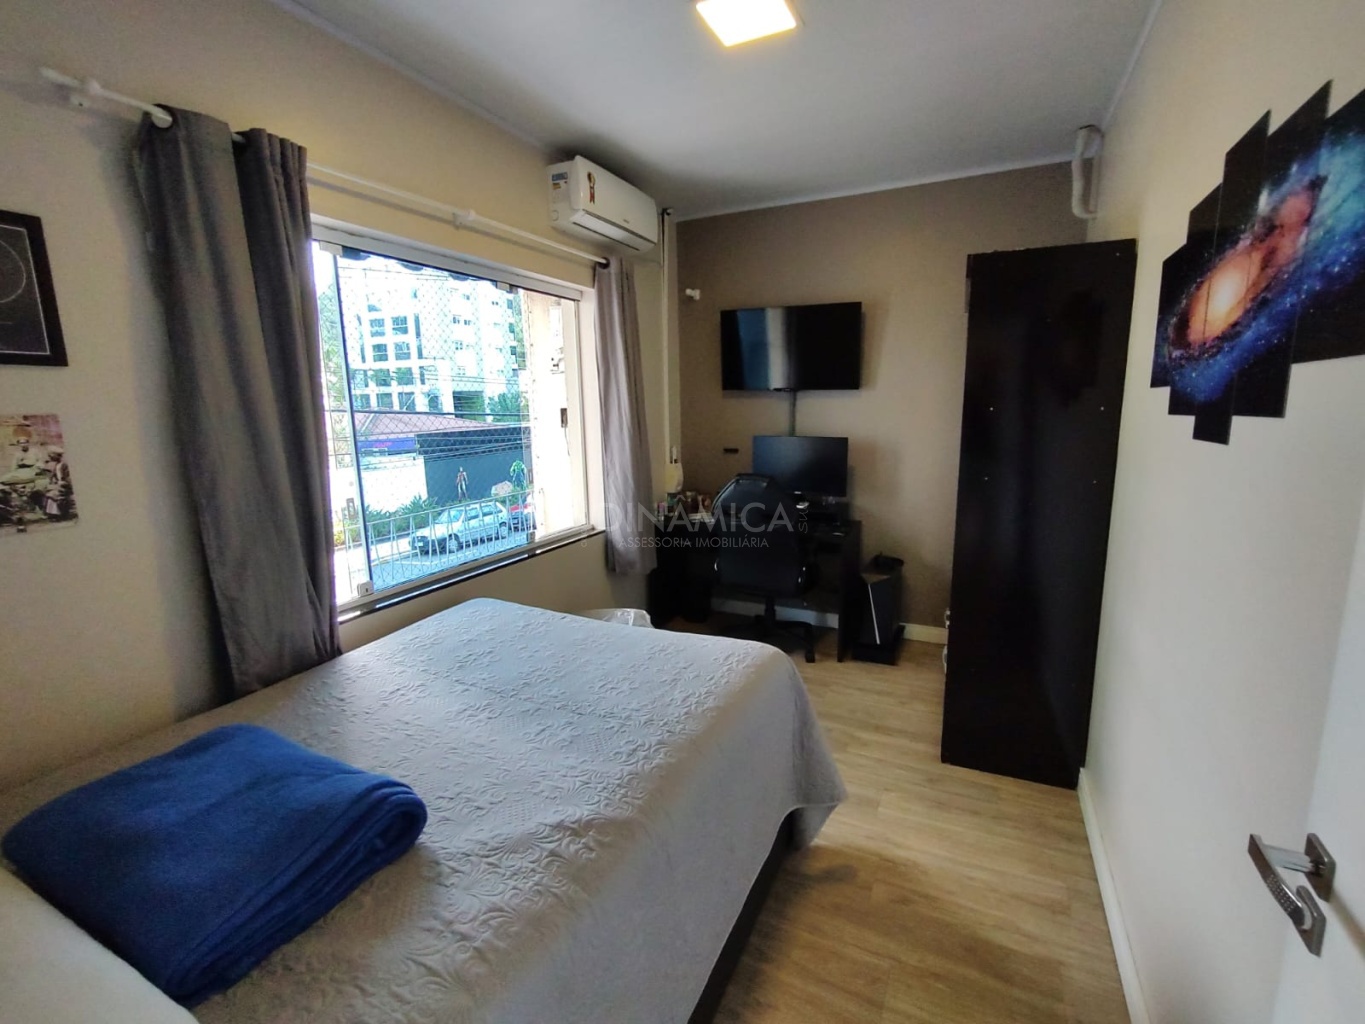 Casa 3 dormitórios, Bairro Ponta Aguda, Blumenau-SC.